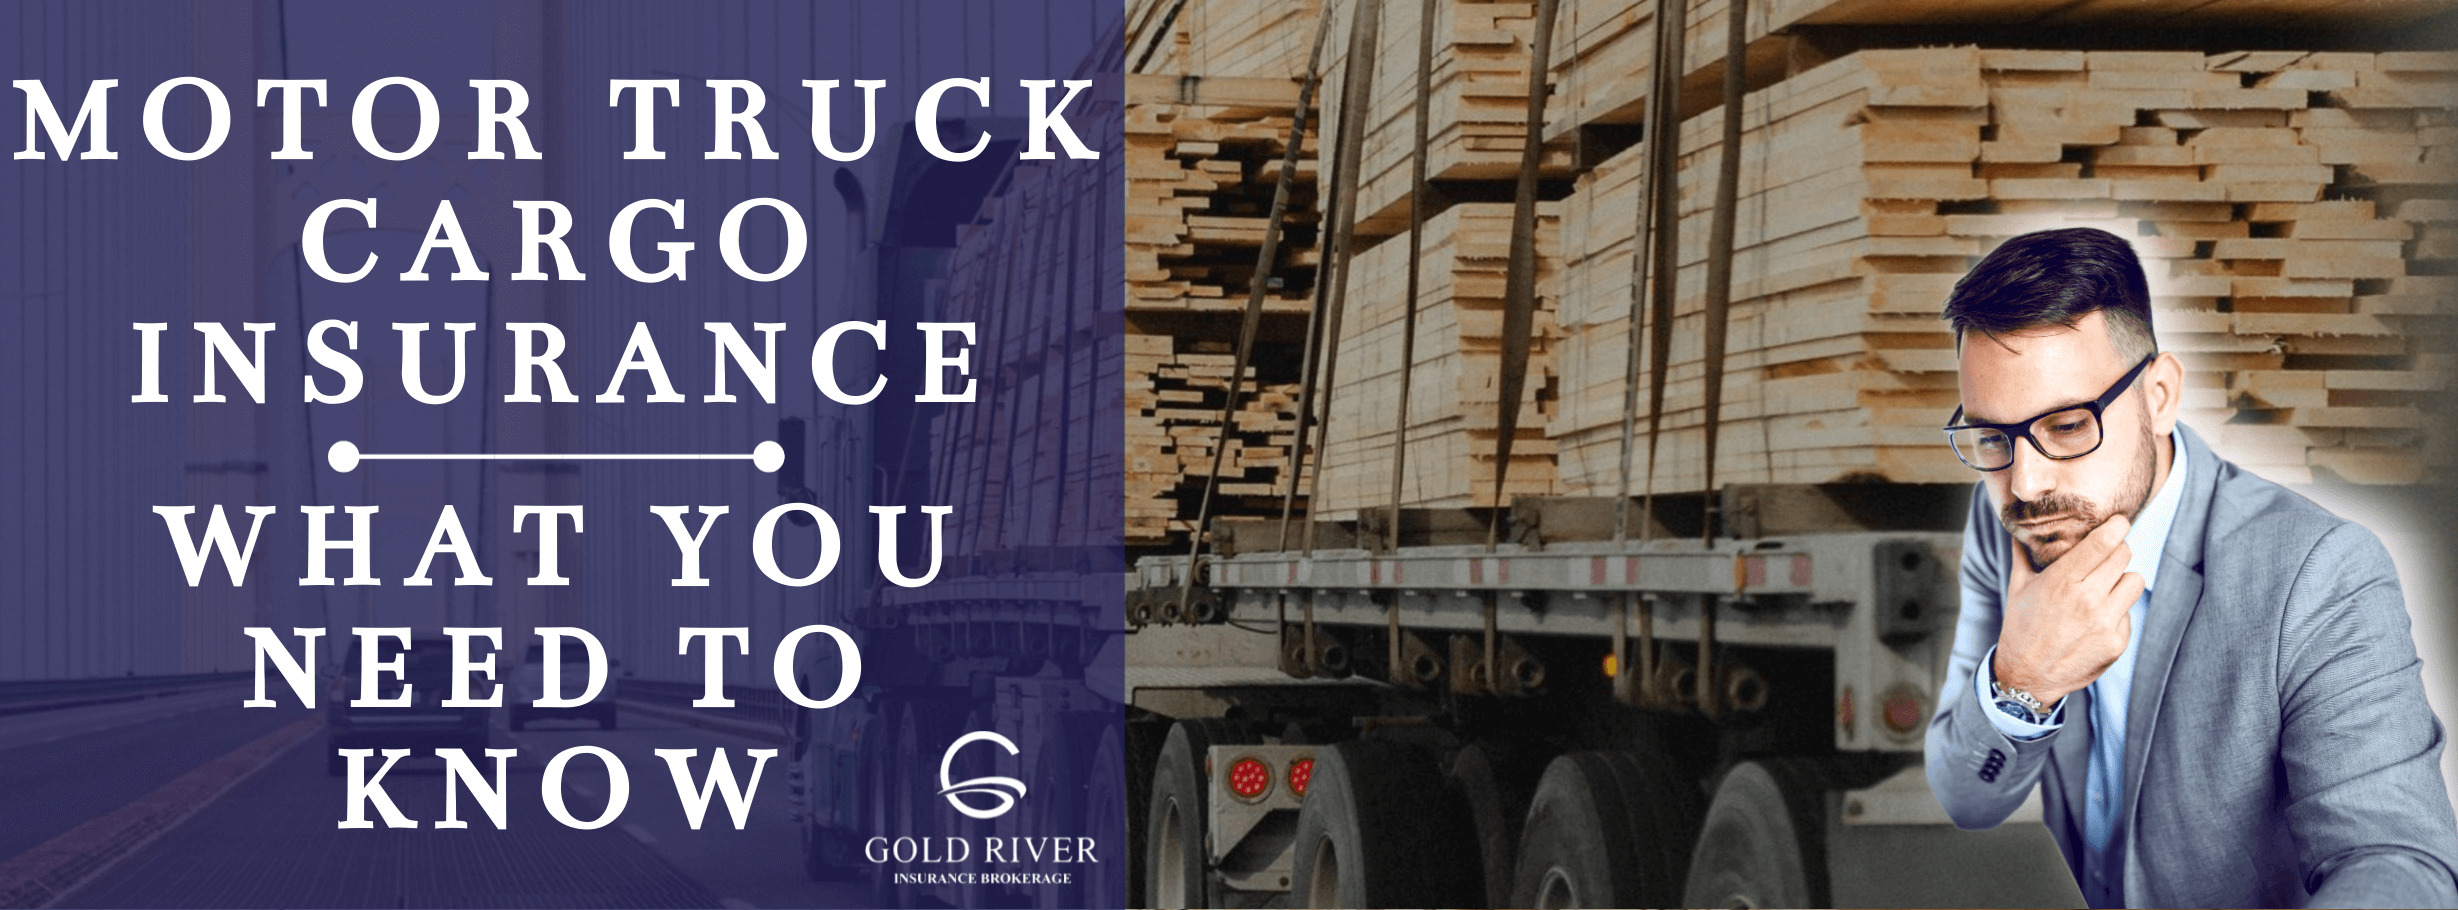 Motor Truck Cargo Insurance Graphic